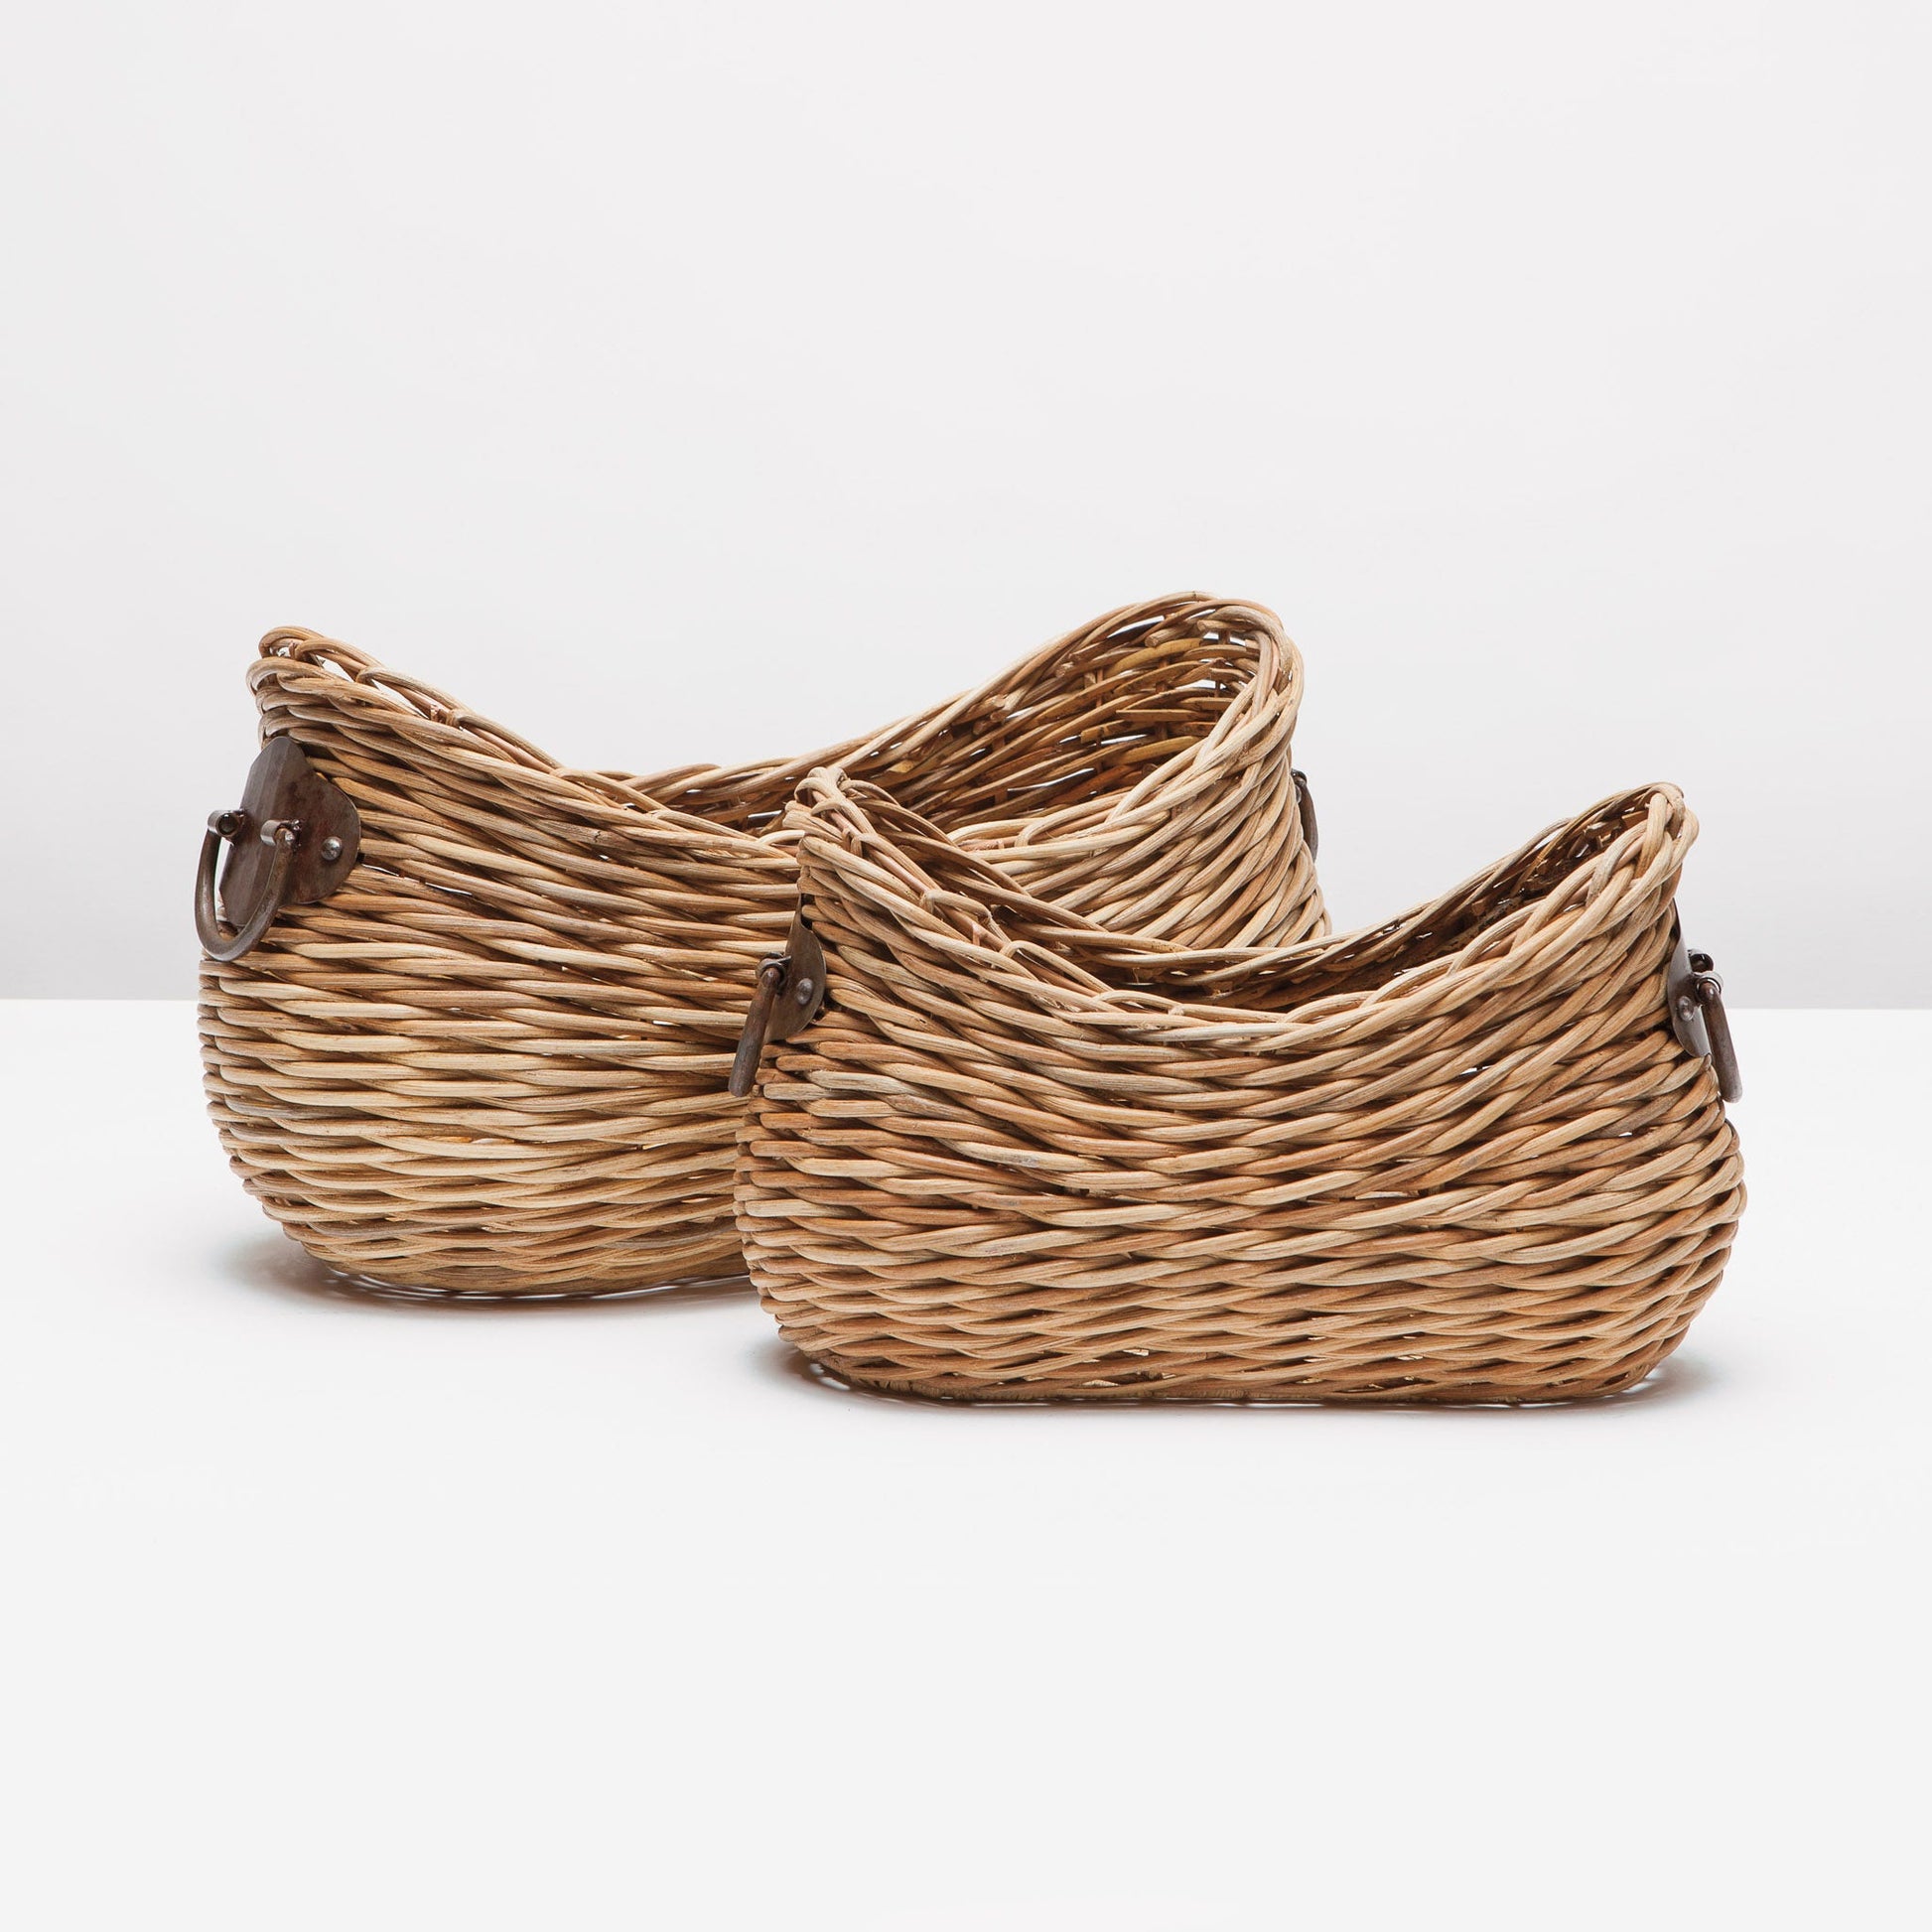 Varna Baskets - Set of 2-Nautical Decor and Gifts